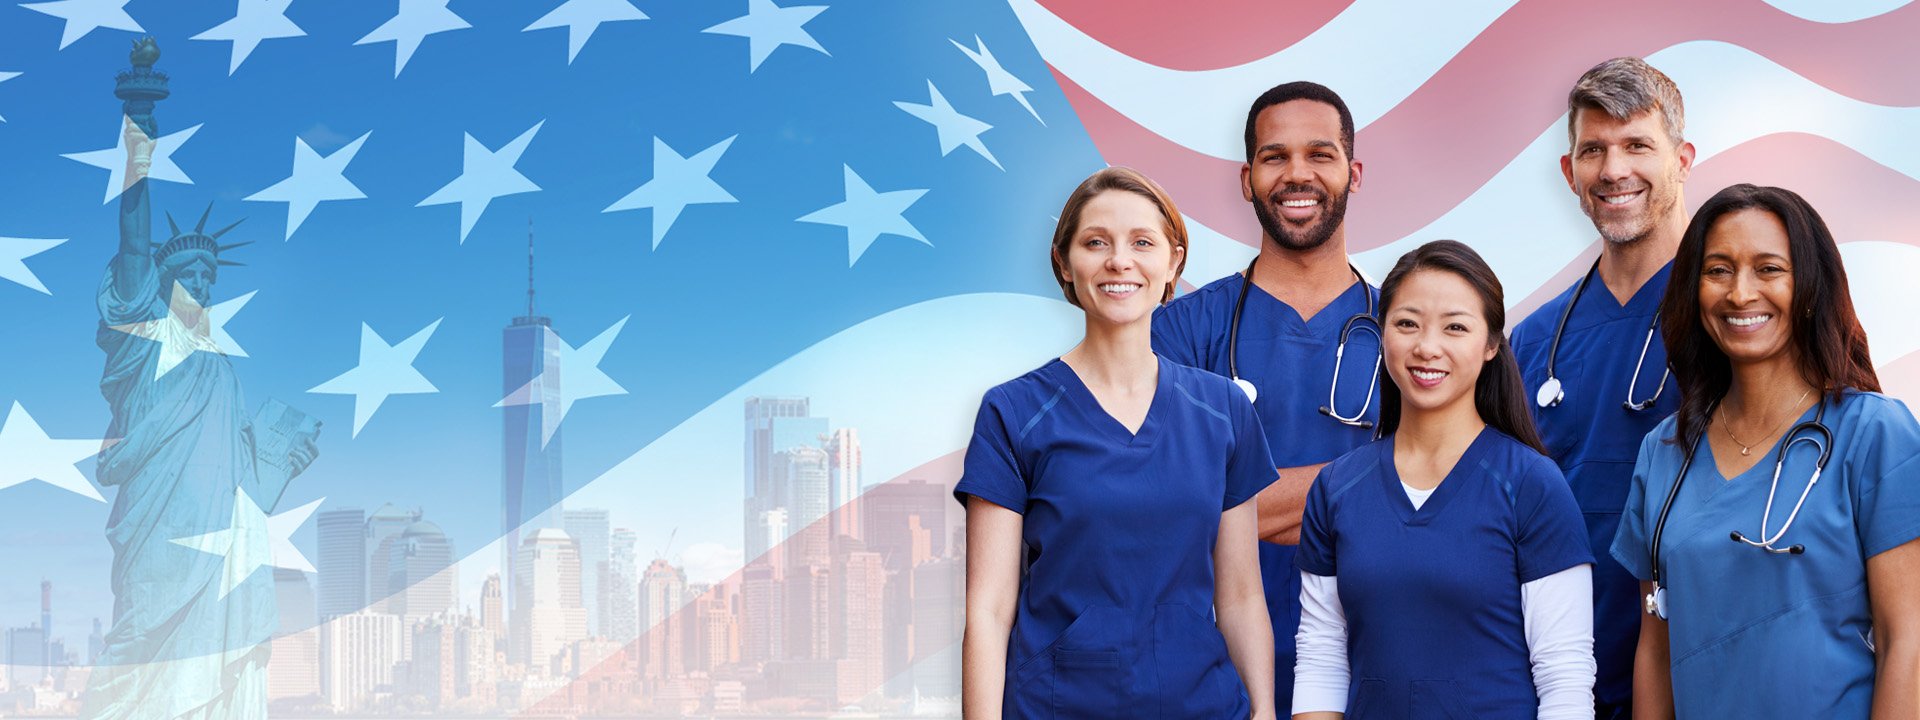 International nurses with an American flag behind them